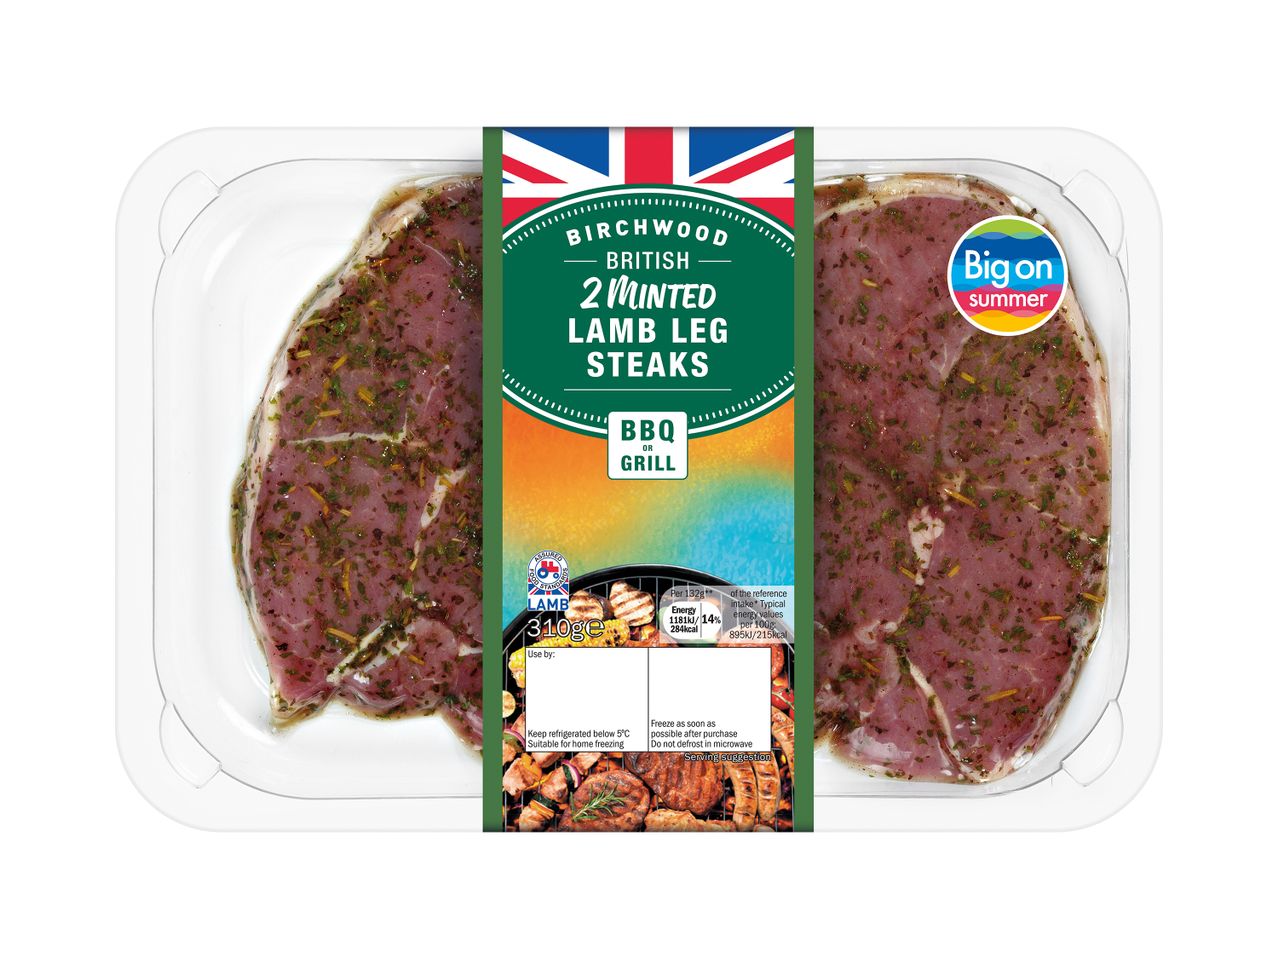 Go to full screen view: Birchwood 2 British Minted Lamb Leg Steaks - Image 1